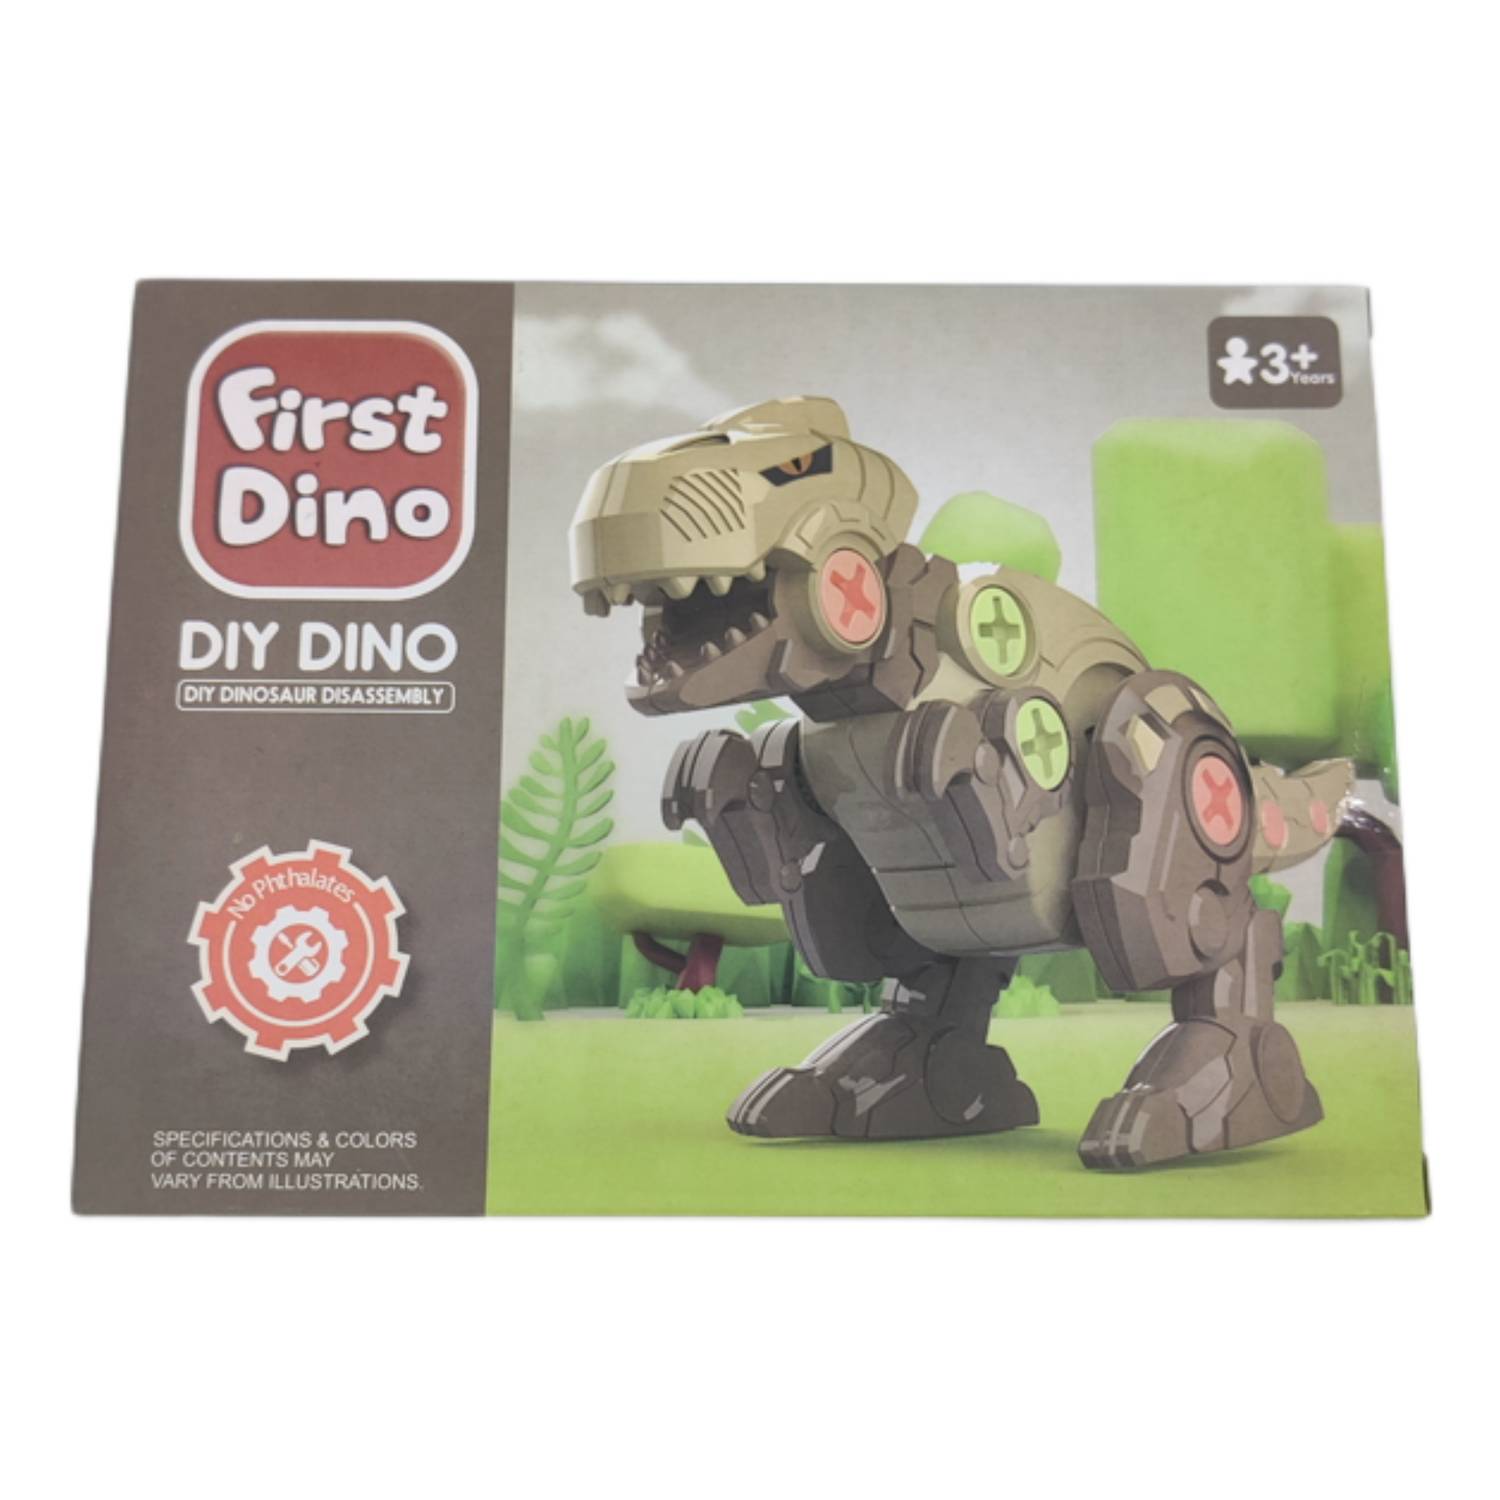 Dino Fun - Dinosaur Doctor Juegos para niños pequeños Niños Niños